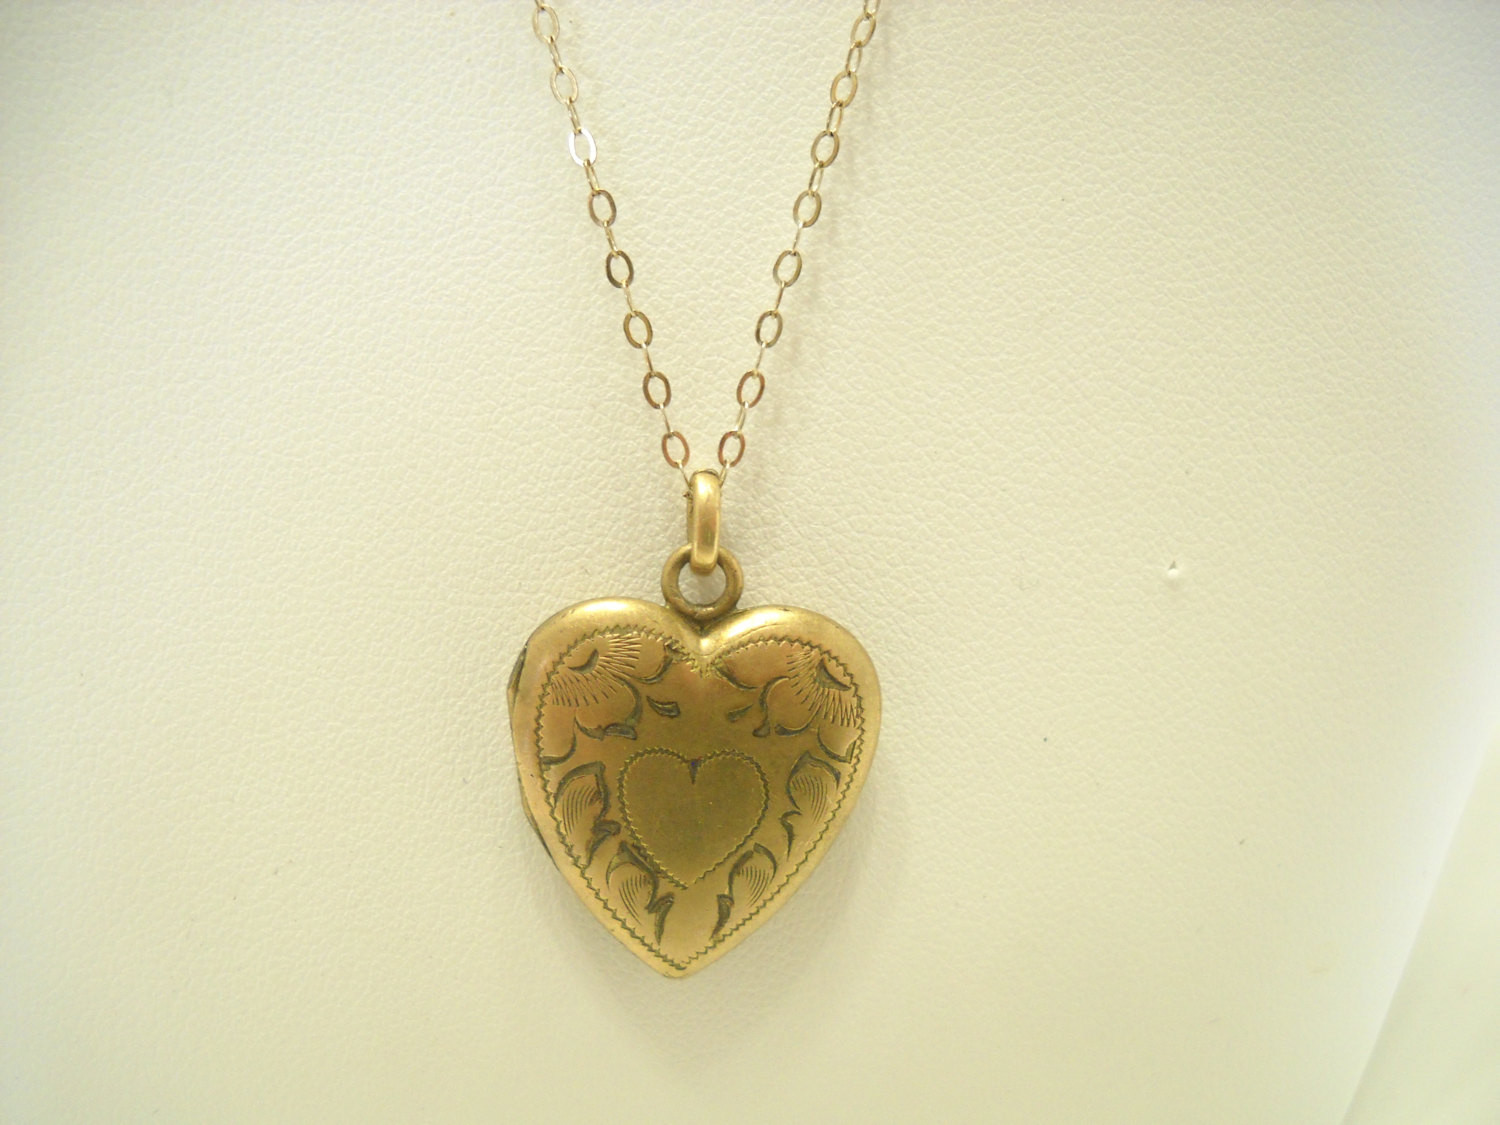 Heart Shaped Locket Necklace
 Vintage Gold Tone Heart Shaped Locket Pendant Necklace 8380